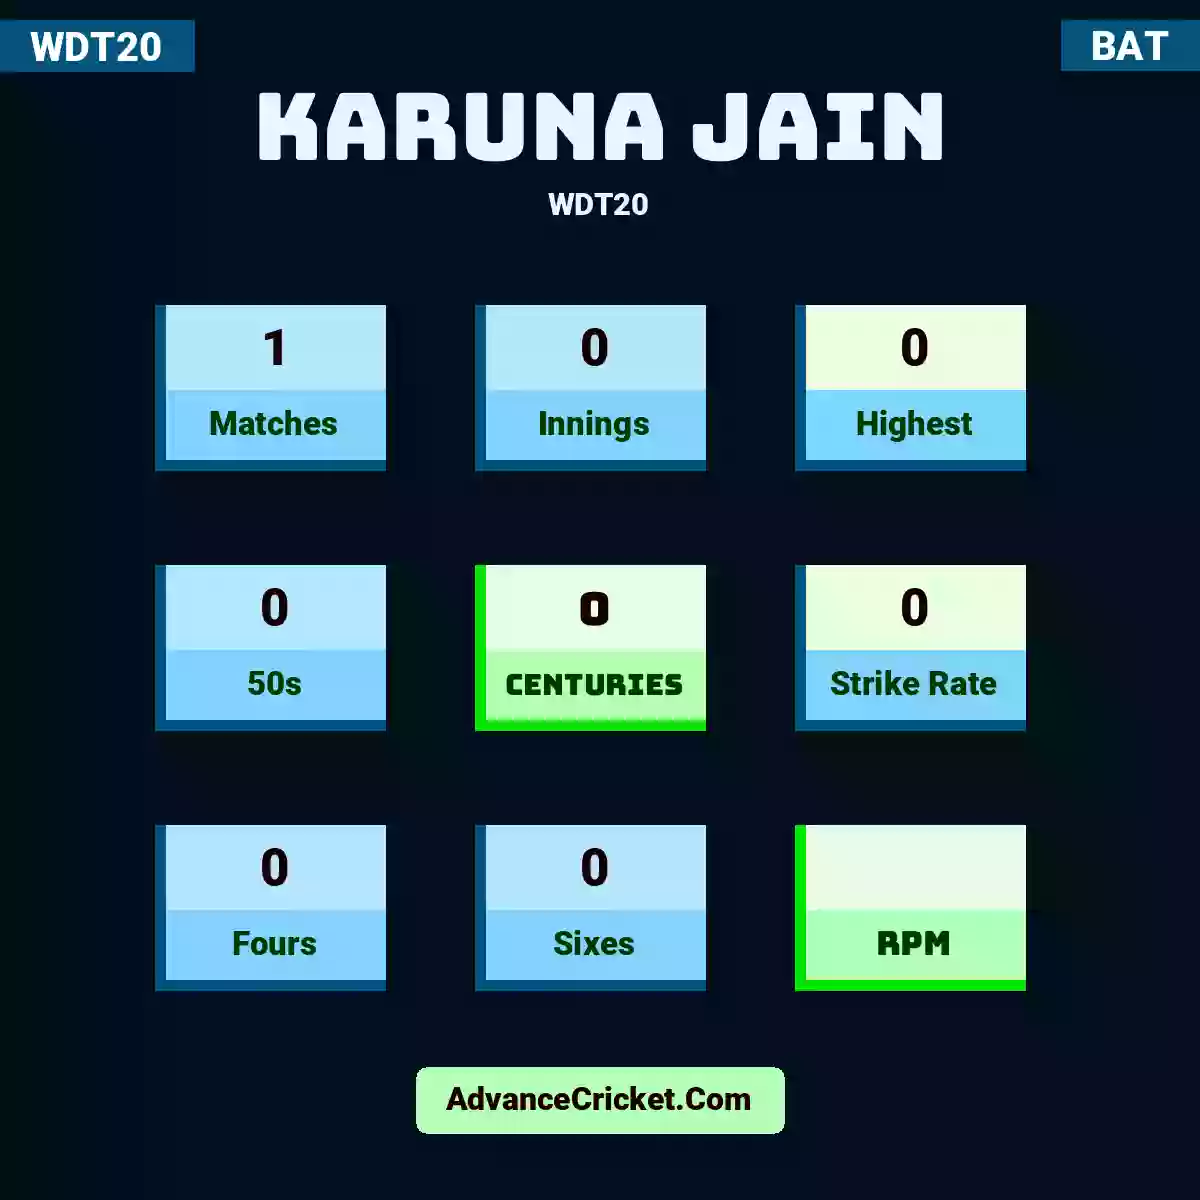 Karuna Jain WDT20 , Karuna Jain played 1 matches, scored 0 runs as highest, 0 half-centuries, and 0 centuries, with a strike rate of 0. K.Jain hit 0 fours and 0 sixes.